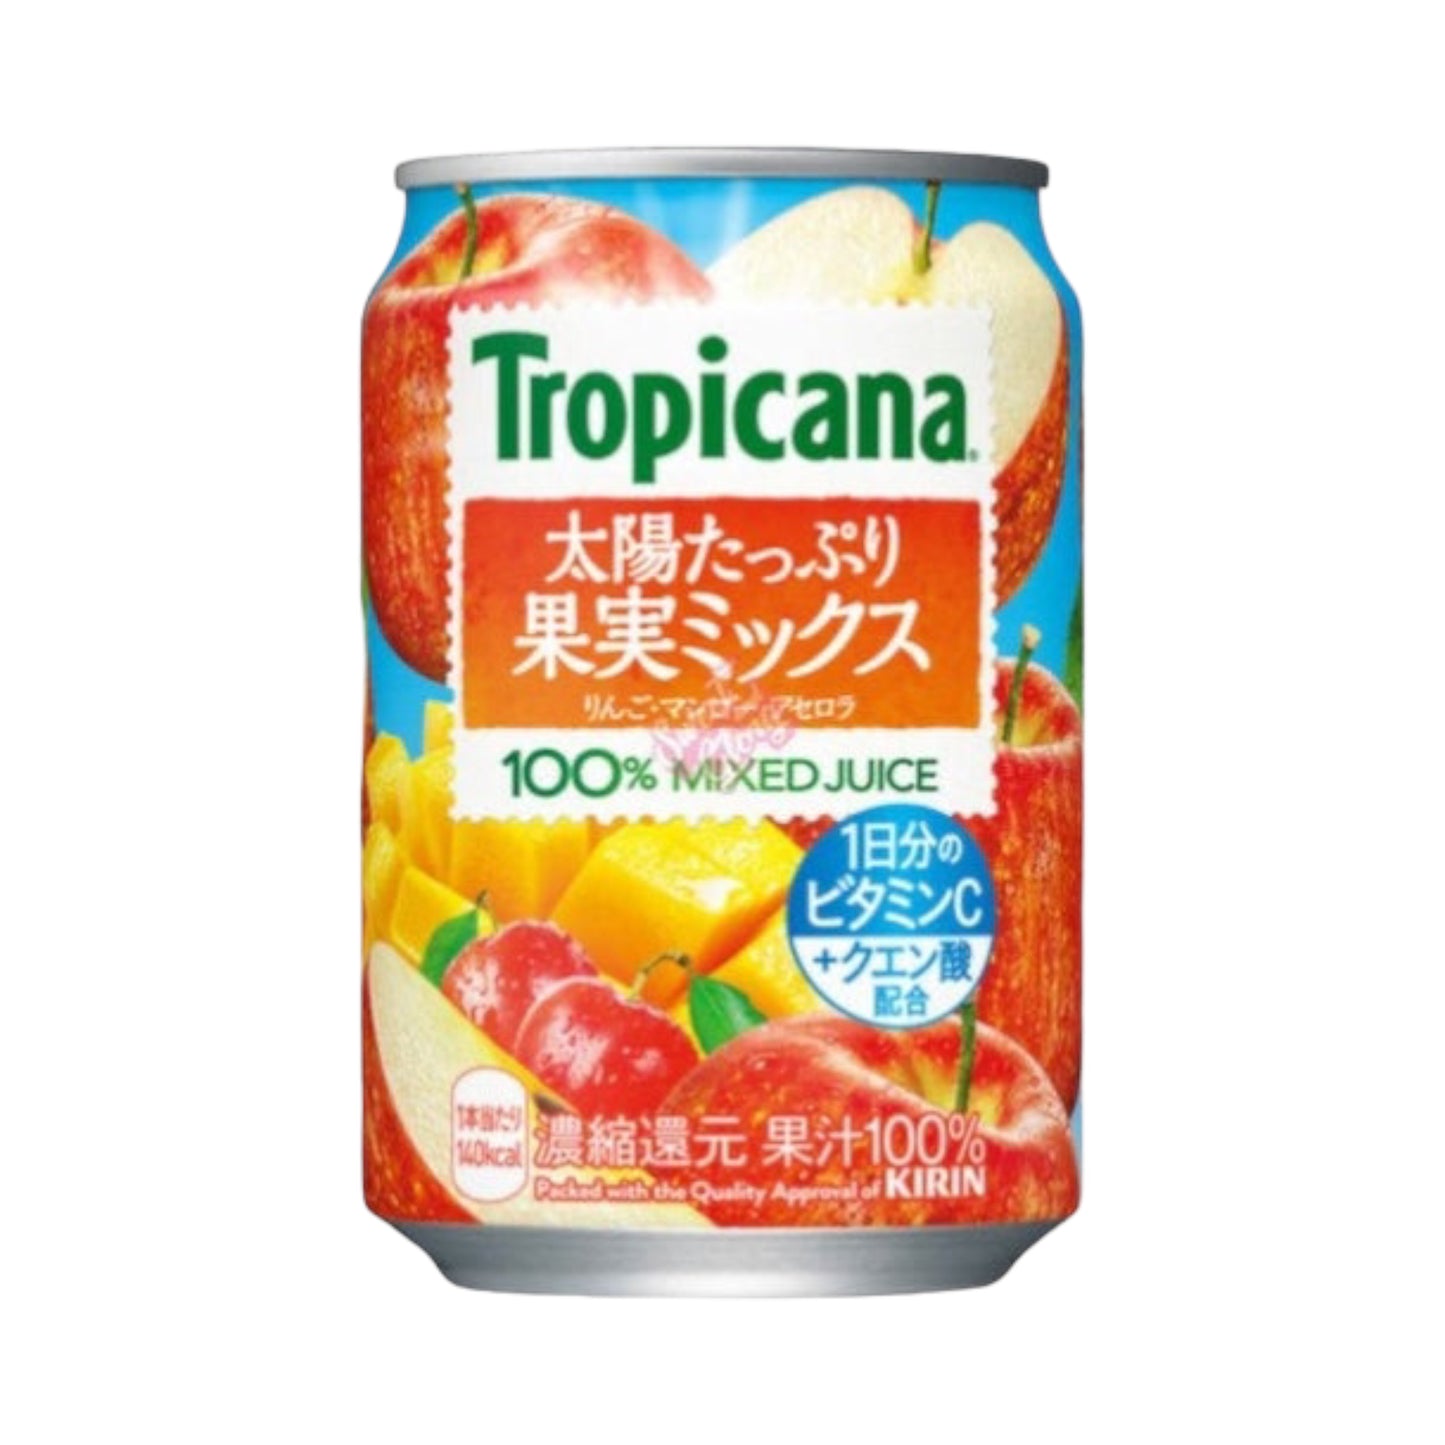 Tropicana Fruits Mixed Juice (Japan) 280ml